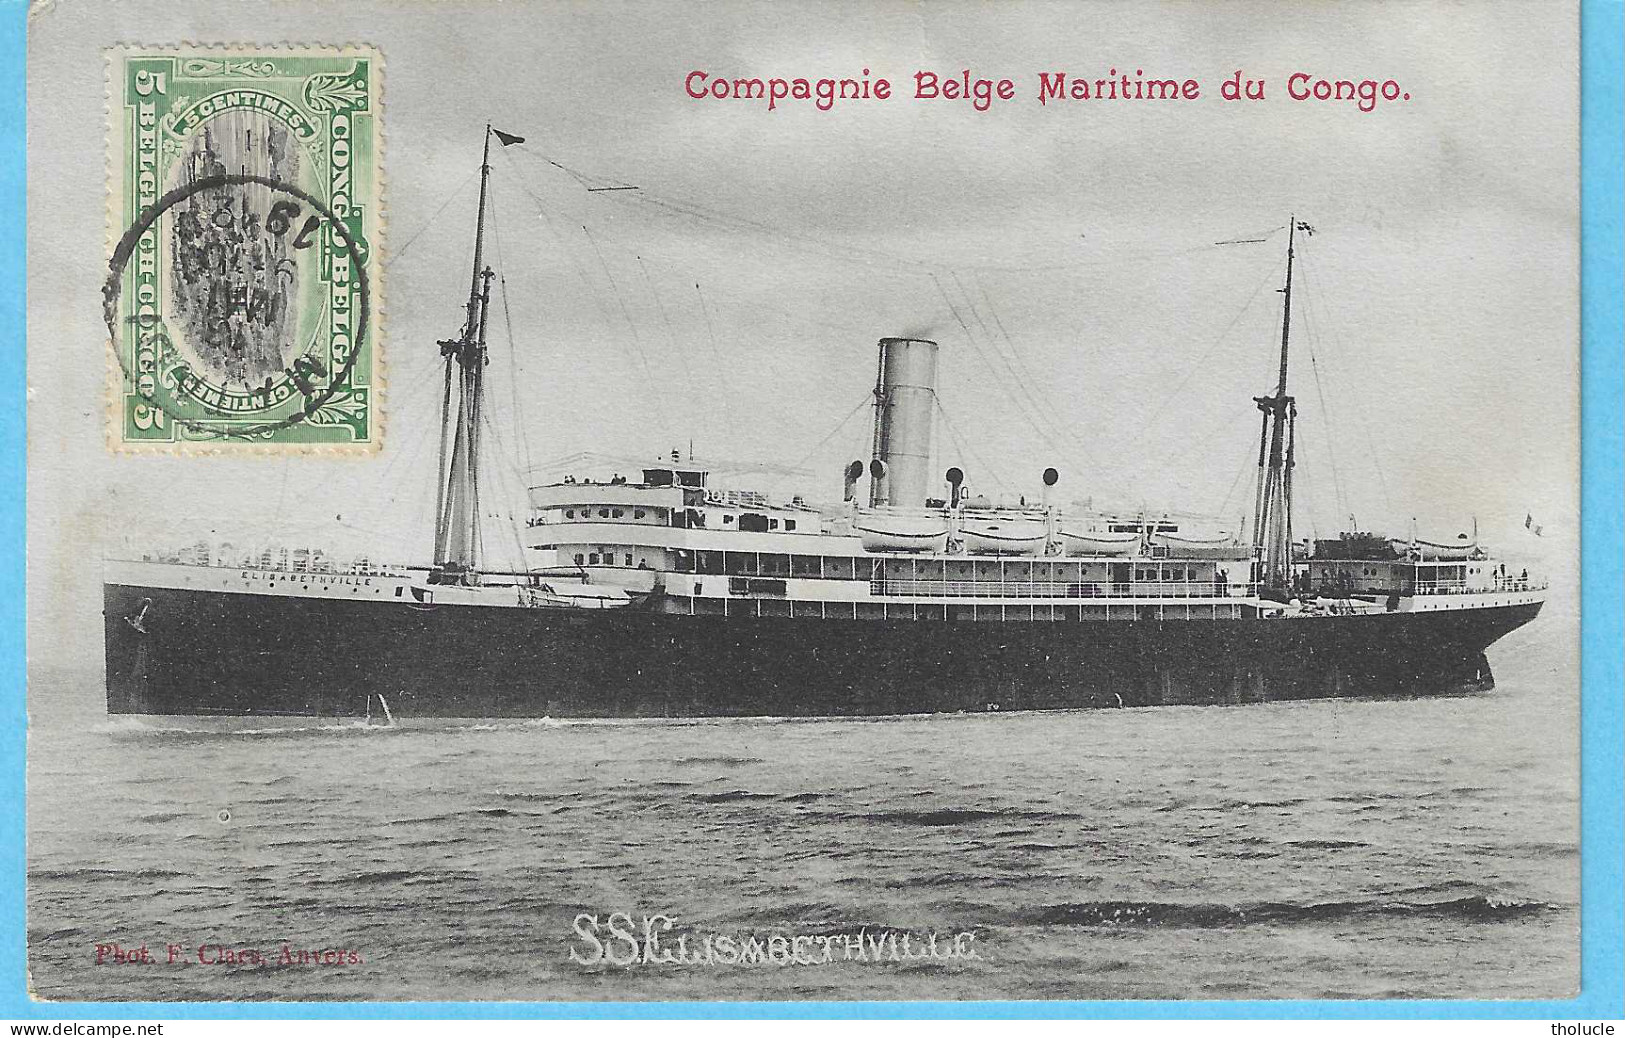 Timbre Type Mols-Belgisch-Congo Belge-Bilingue-1910-5c Vert-N°54-Cachet "Matadi-1912"CPA-SS.Elisabethville-Navire - Lettres & Documents